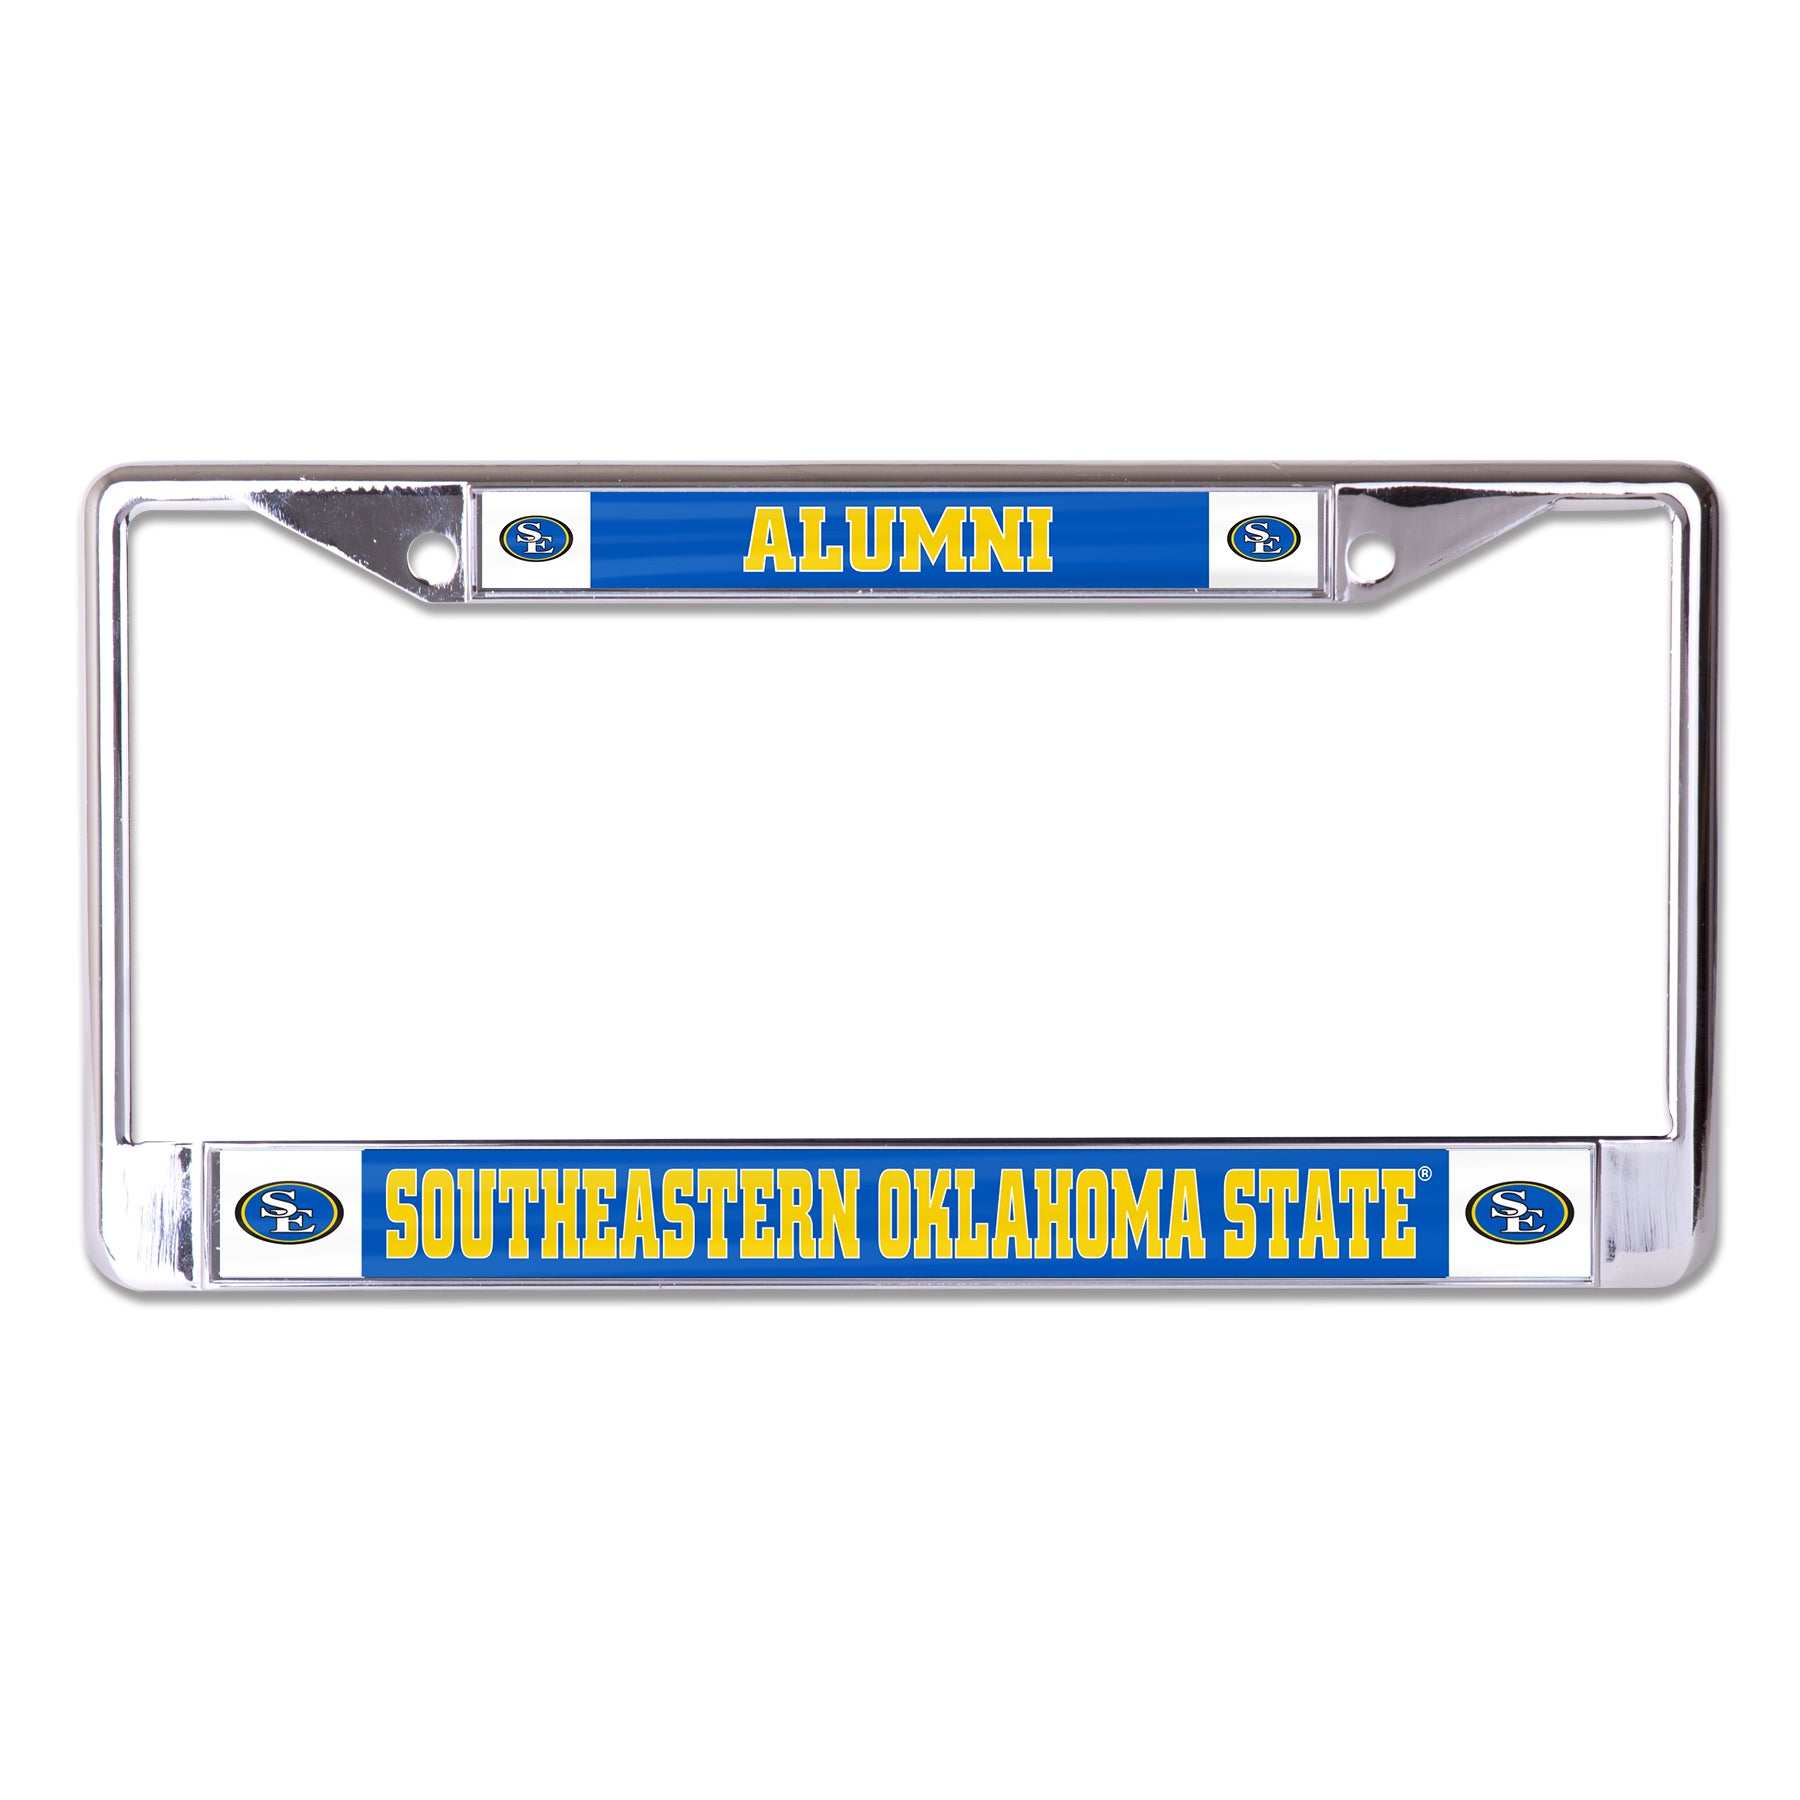 Southeastern Oklahoma State University Alumni Chrome License Plate Frame